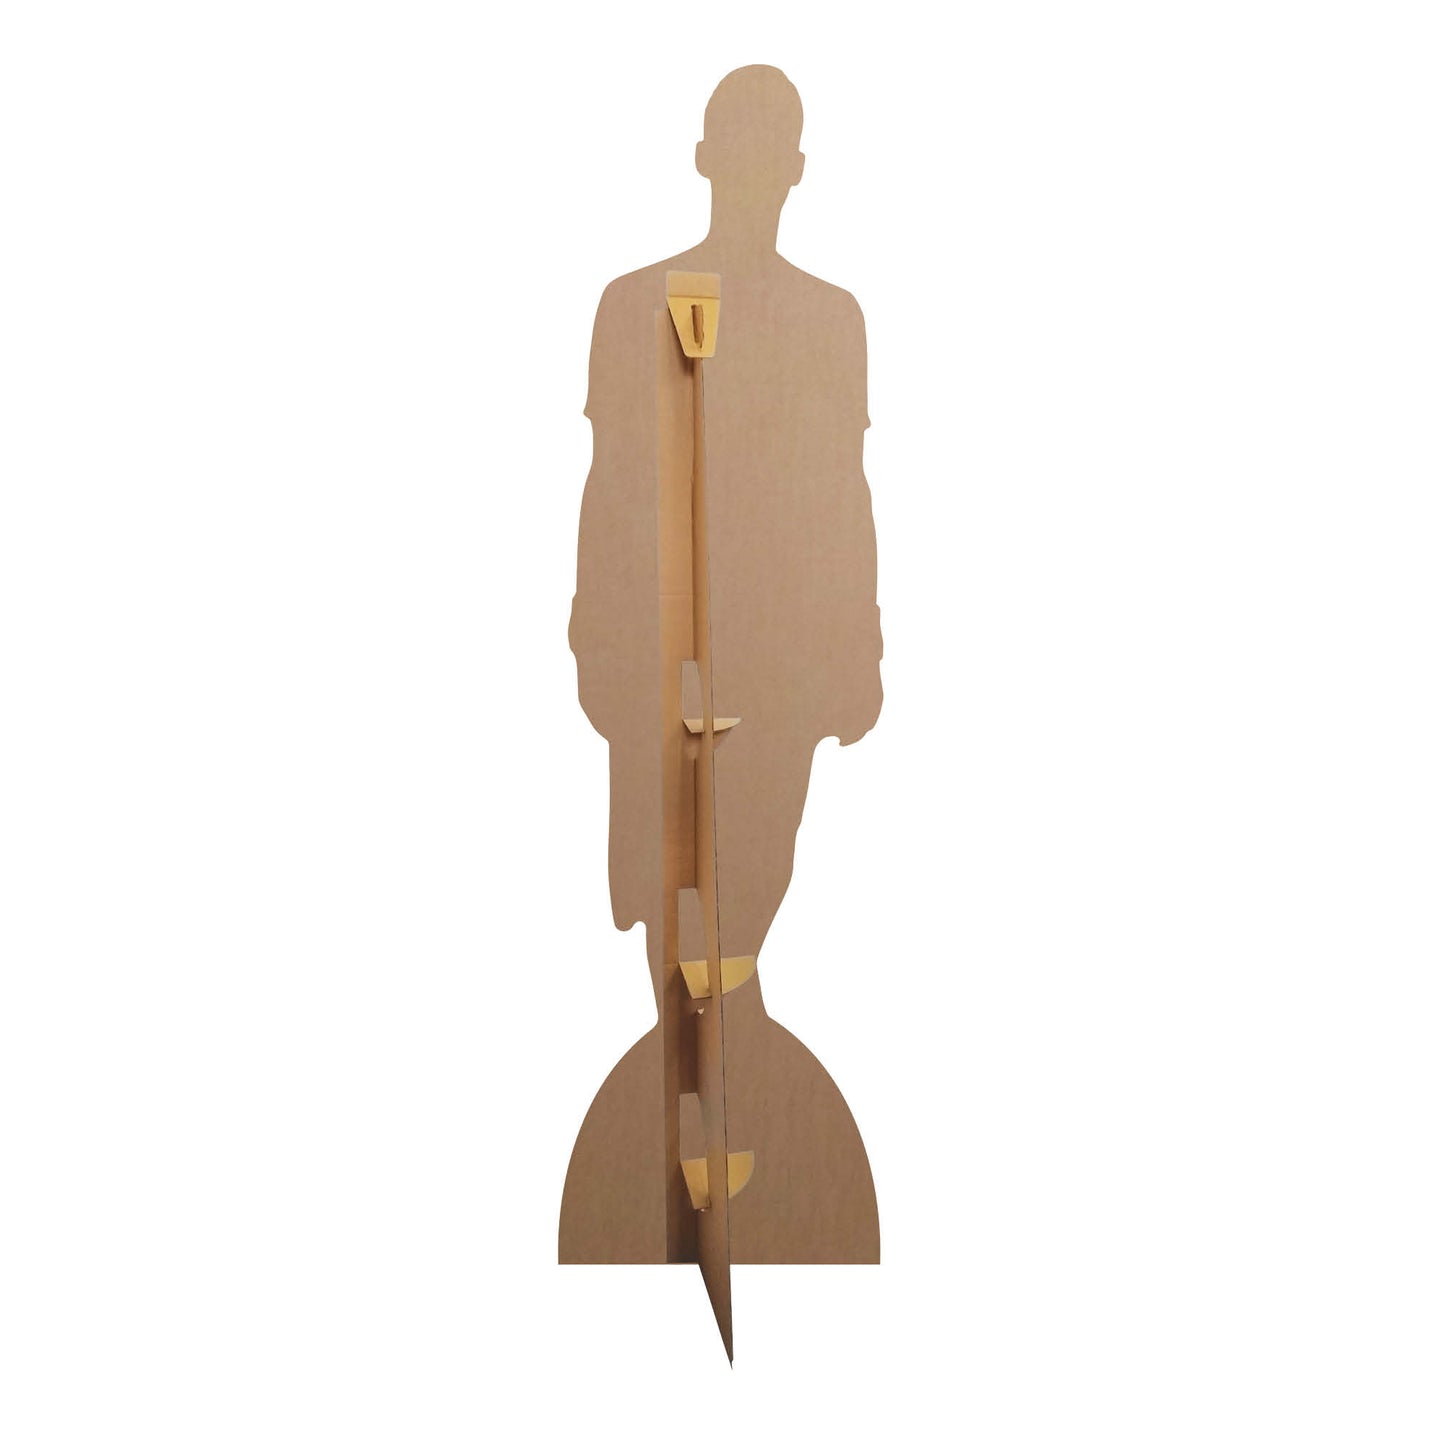 CS676 Novak Djokovic Height 186cm Lifesize Cardboard Cut Out With Mini